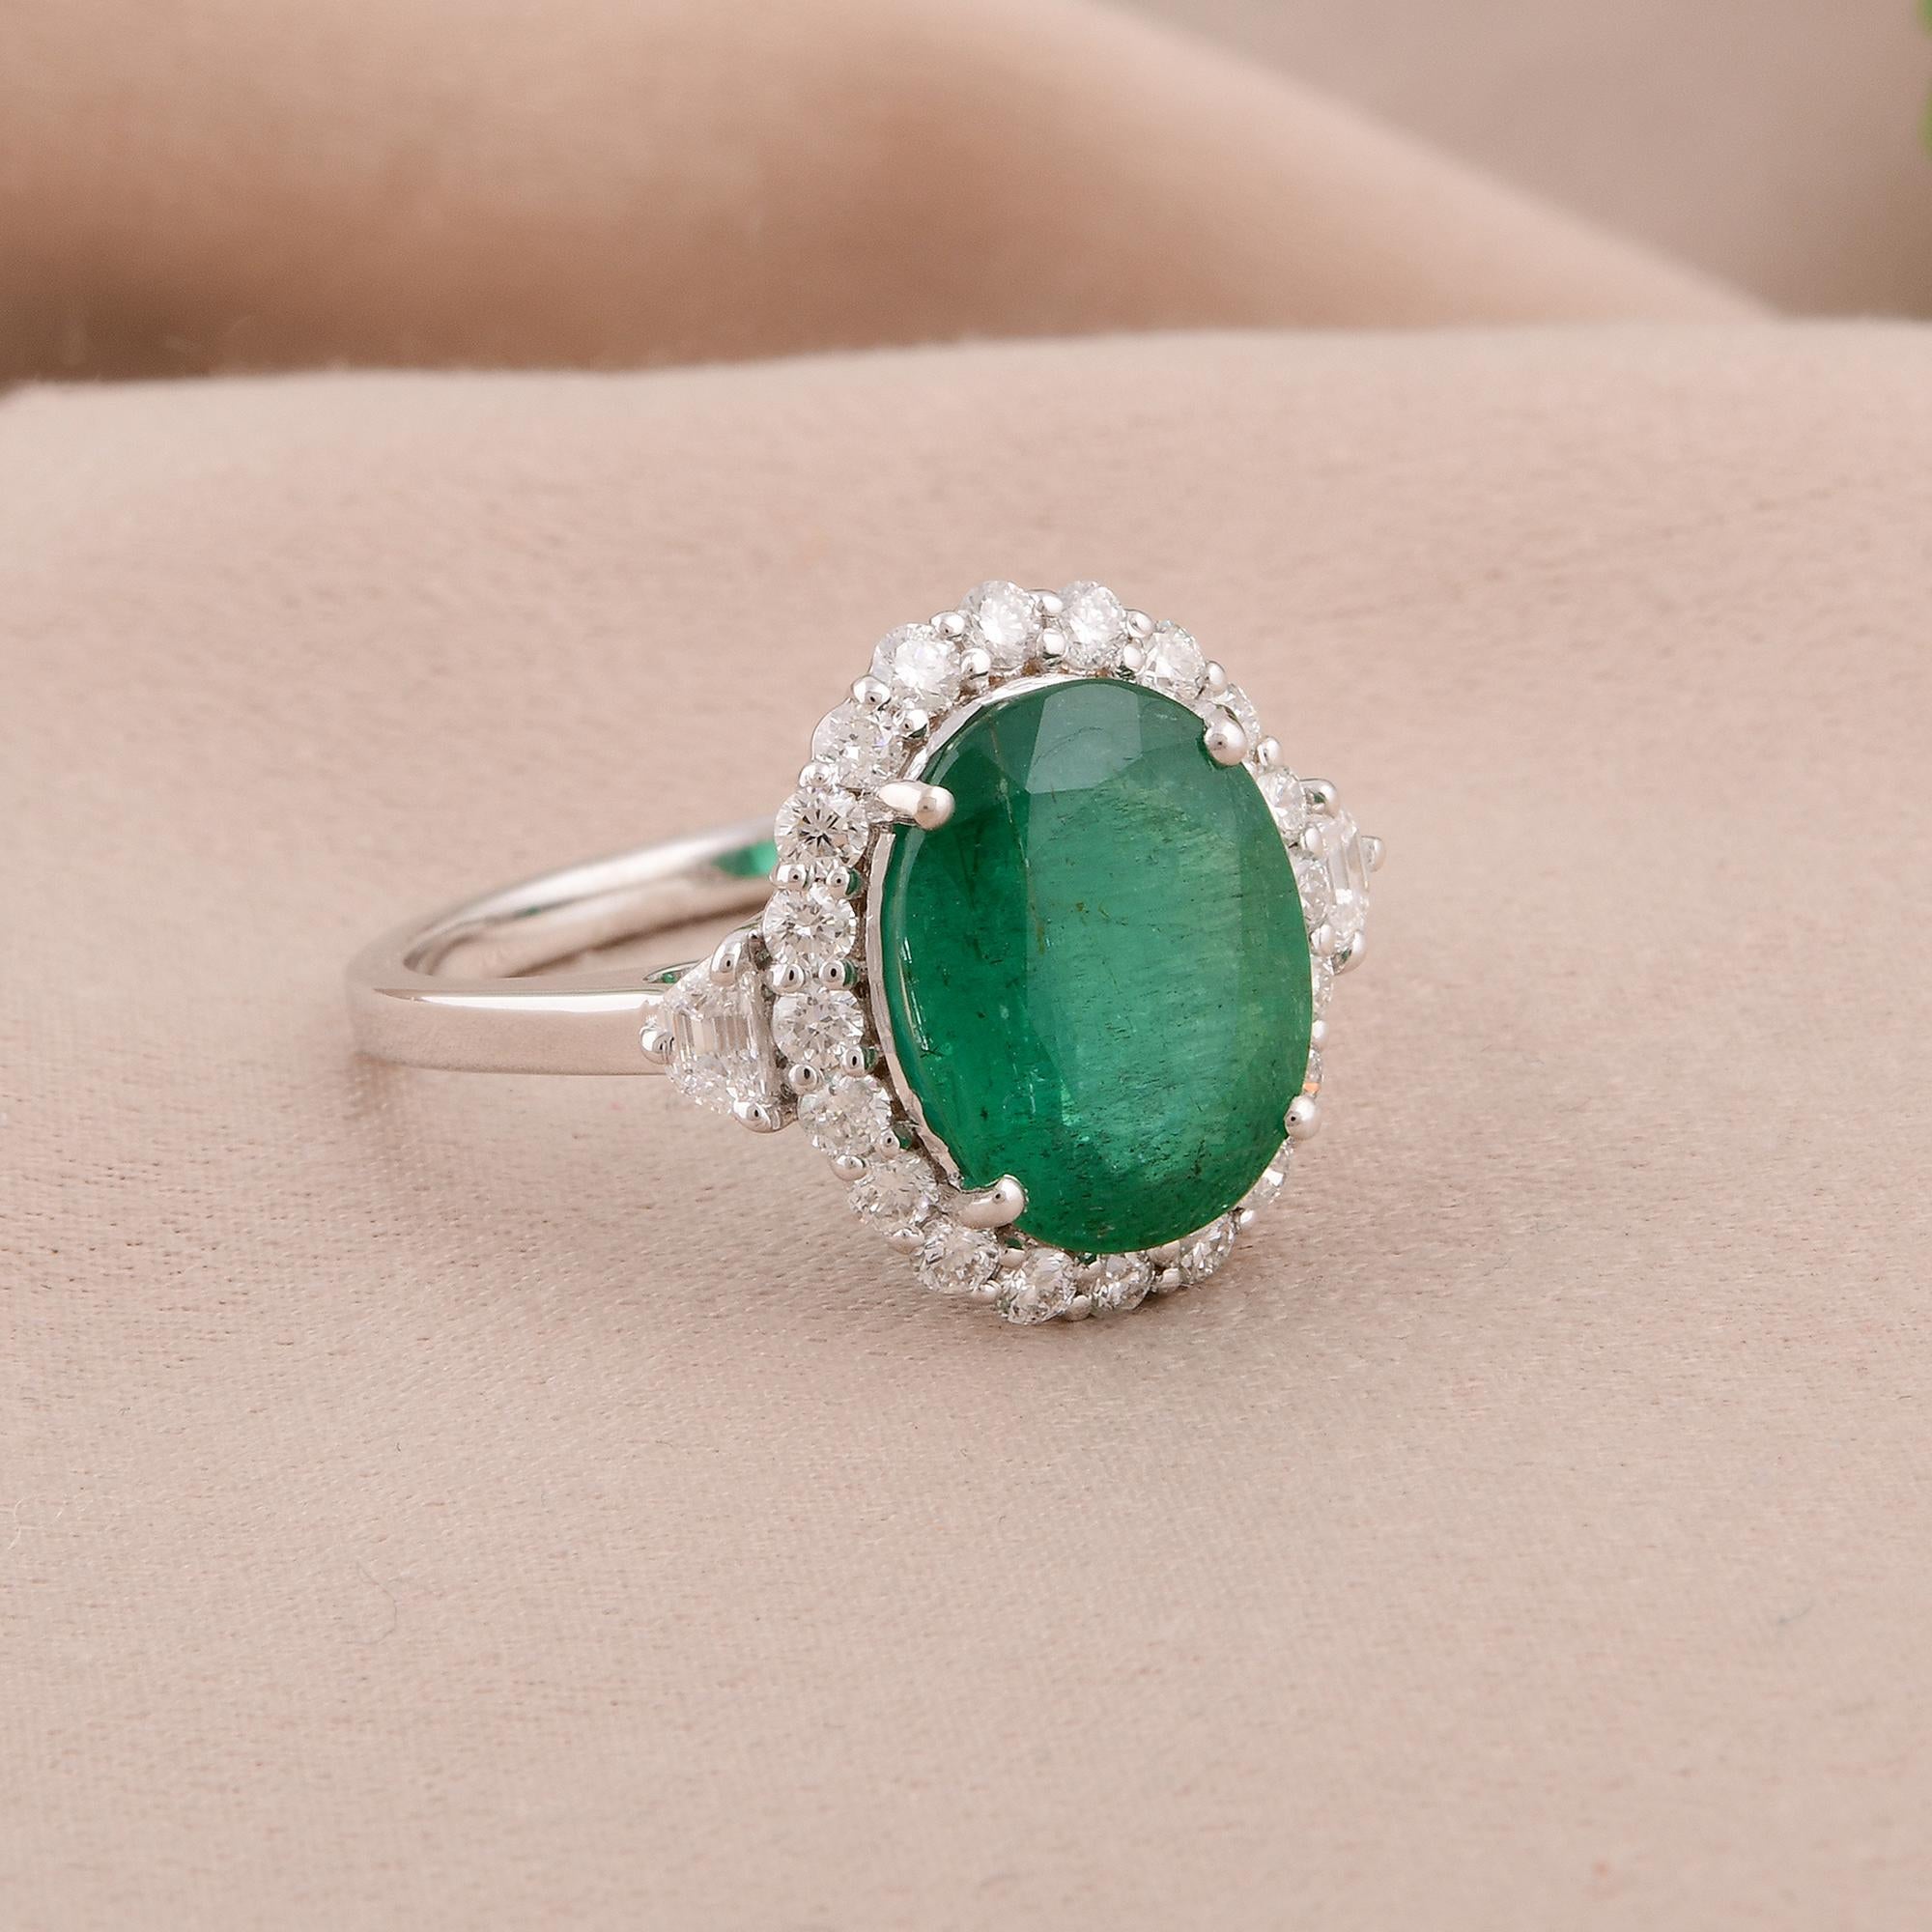 Oval Cut Oval Shape Zambian Emerald Gemstone Cocktail Ring Diamond 14 Karat White Gold For Sale